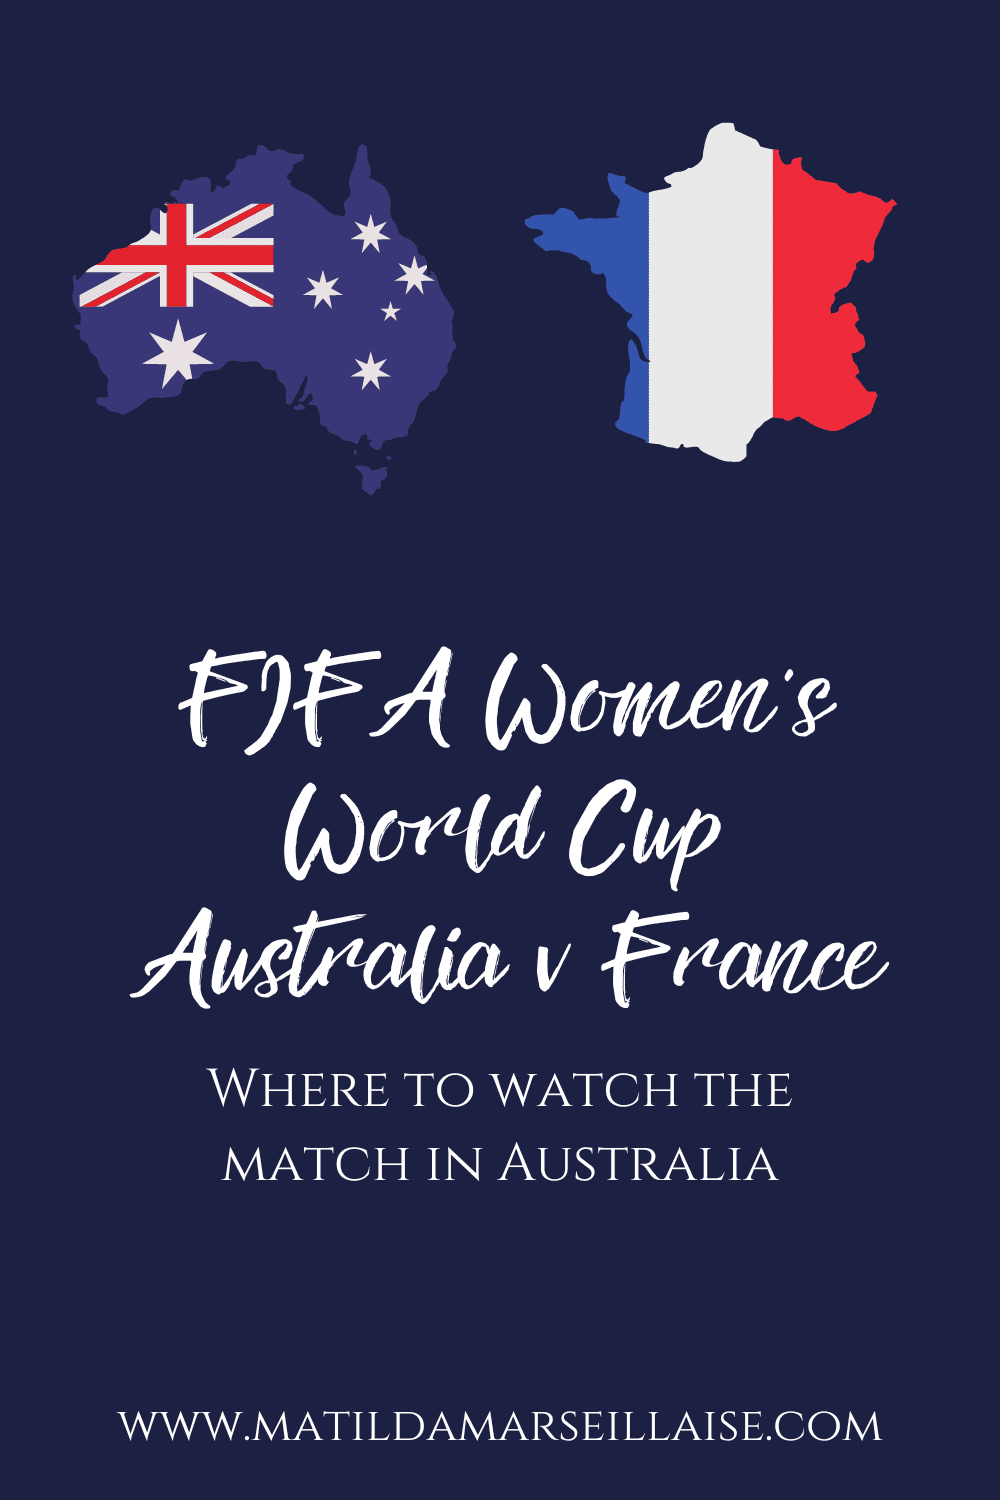 Where to watch Australia v France in Australia tomorrow